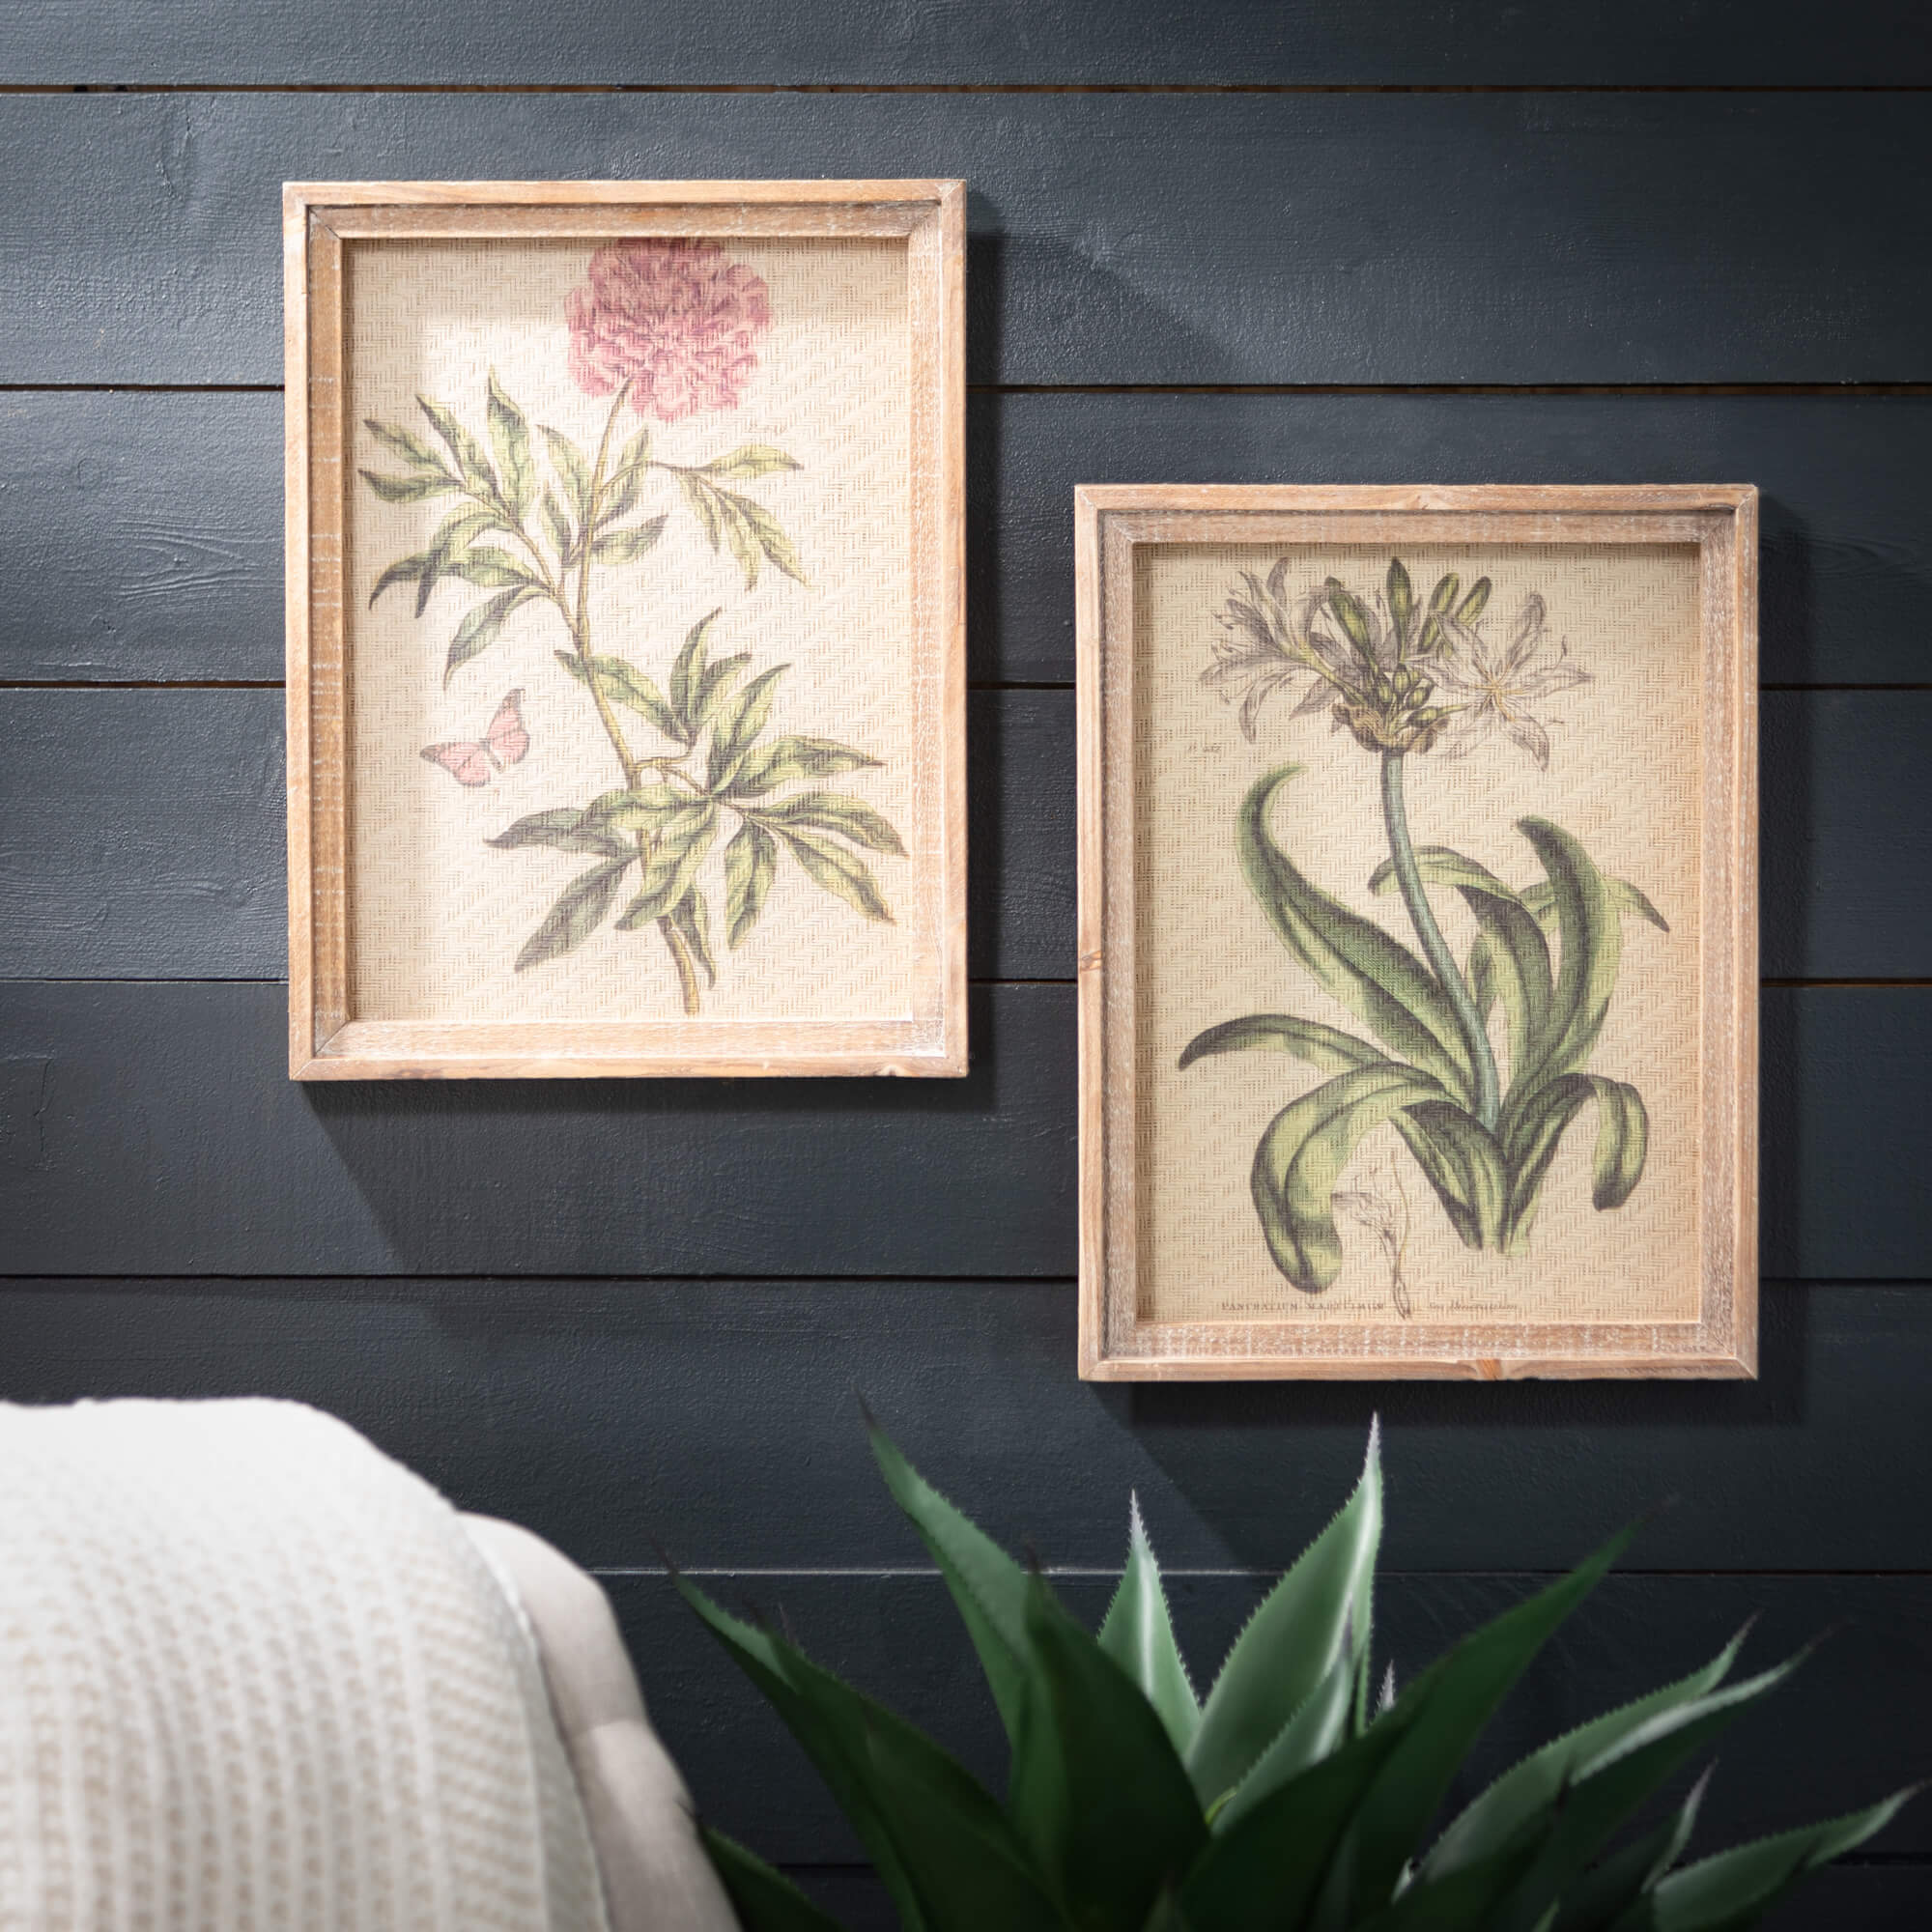 Retro Wildflower Art Print Set - Online Only